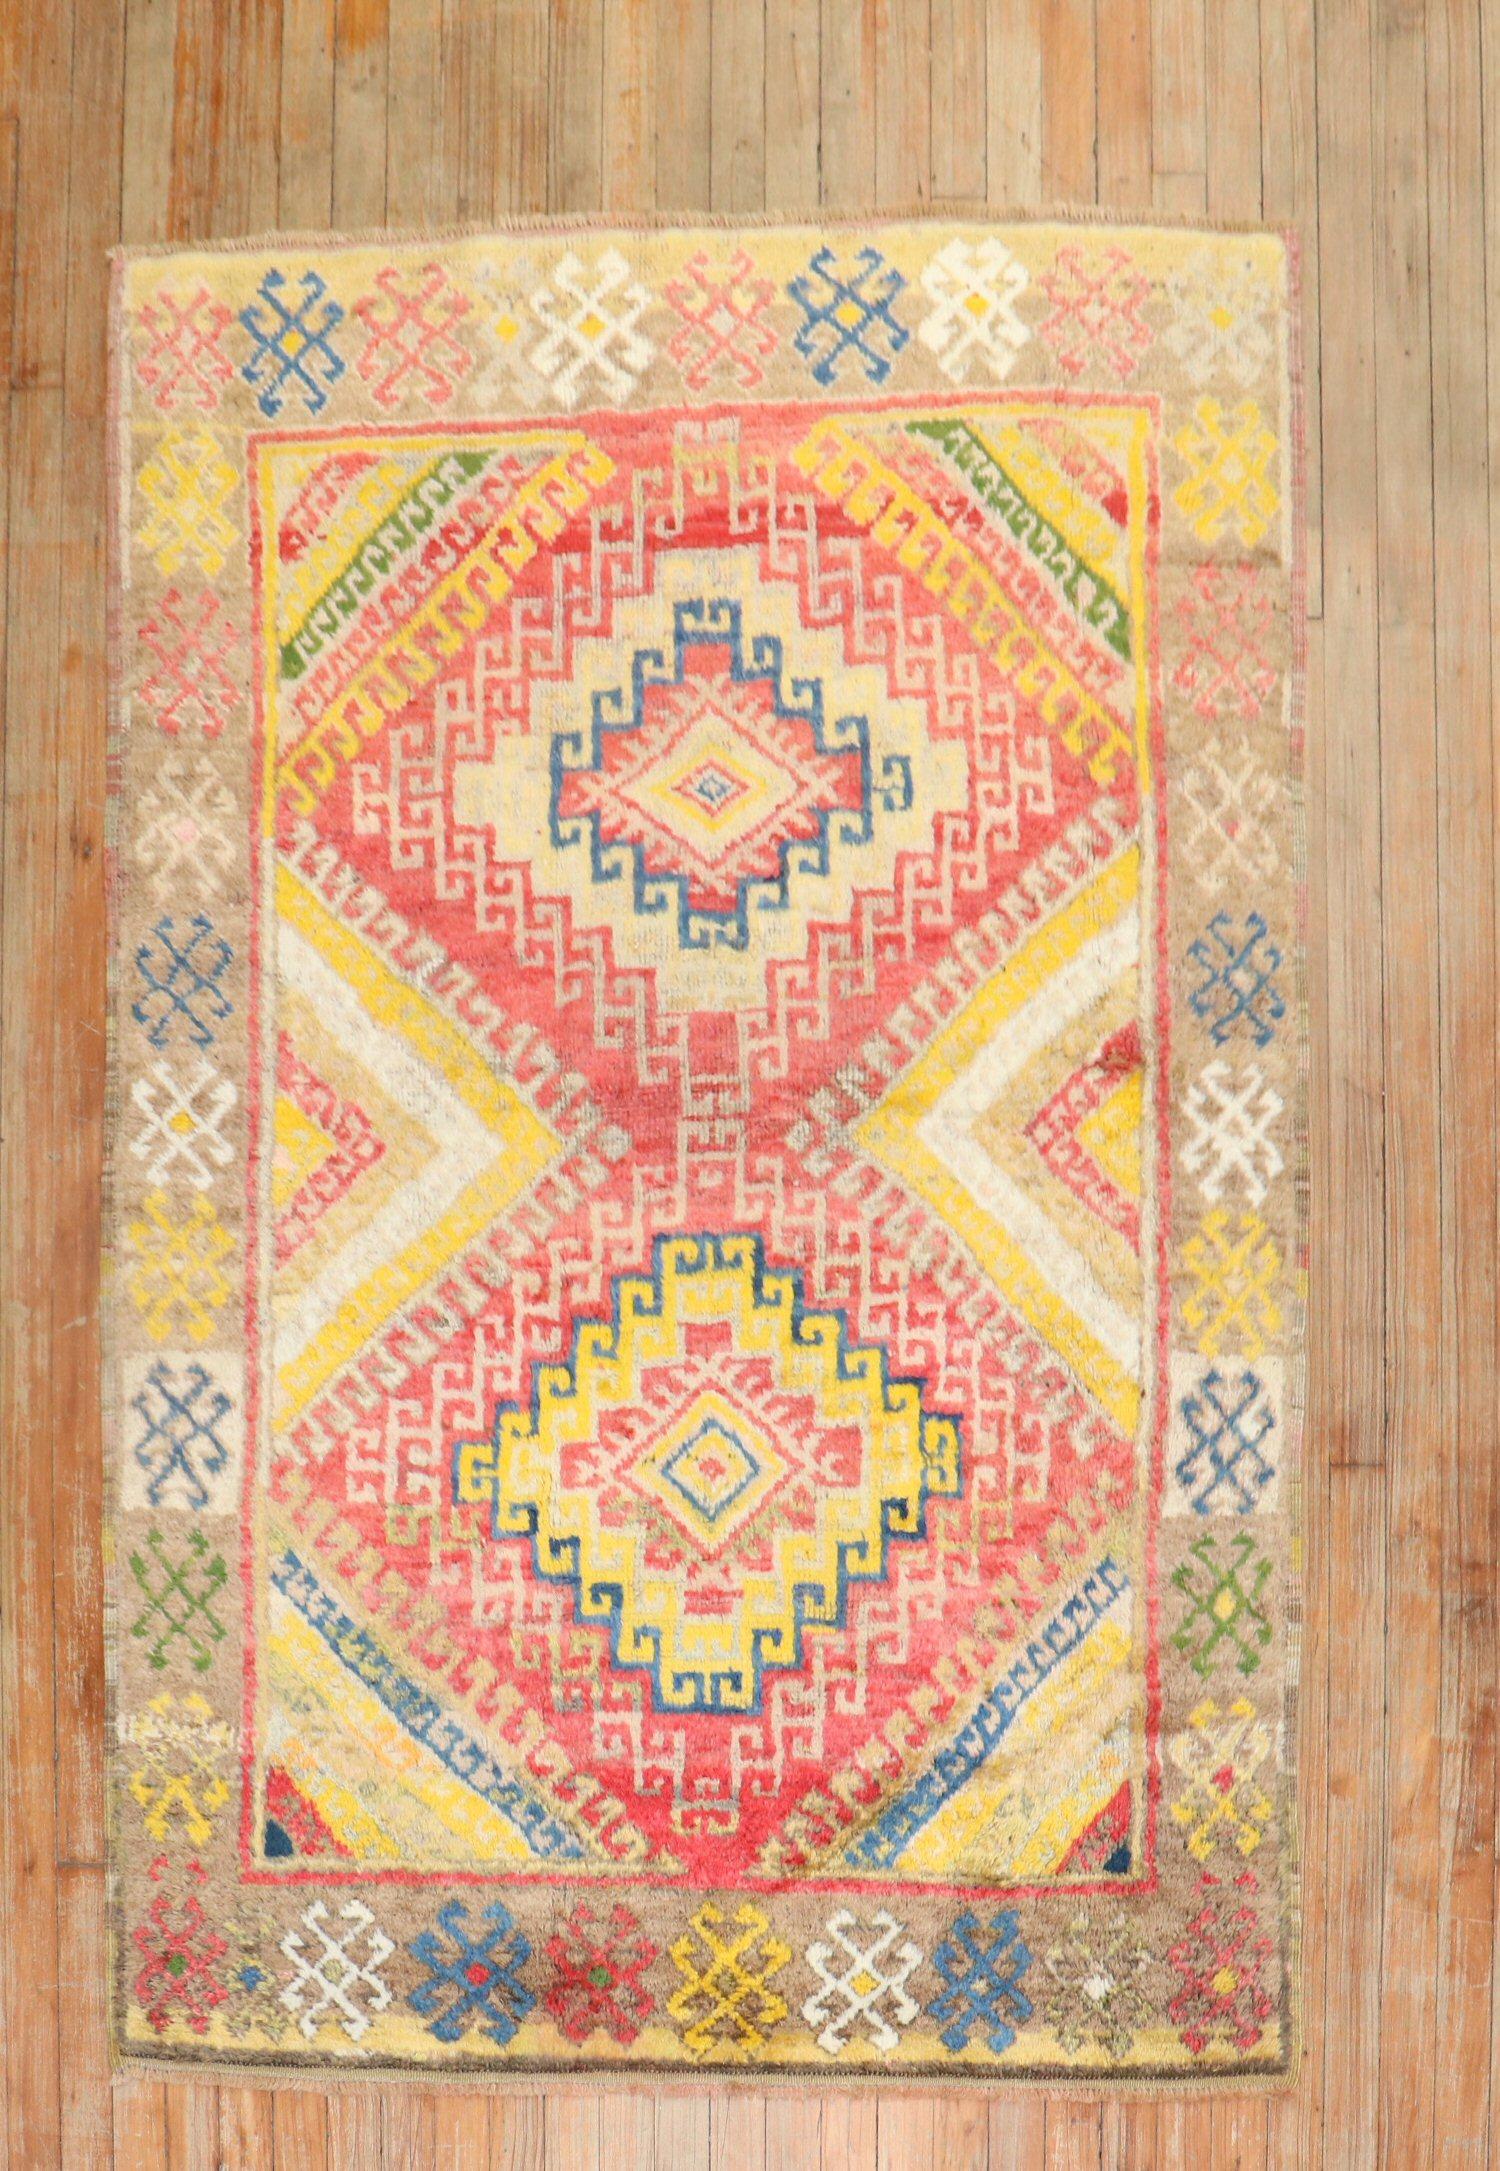 3rd Quarter of the 20th century High Pile Geometric Turkish Konya Rug

Details
rug no. j2853

size 4' 1